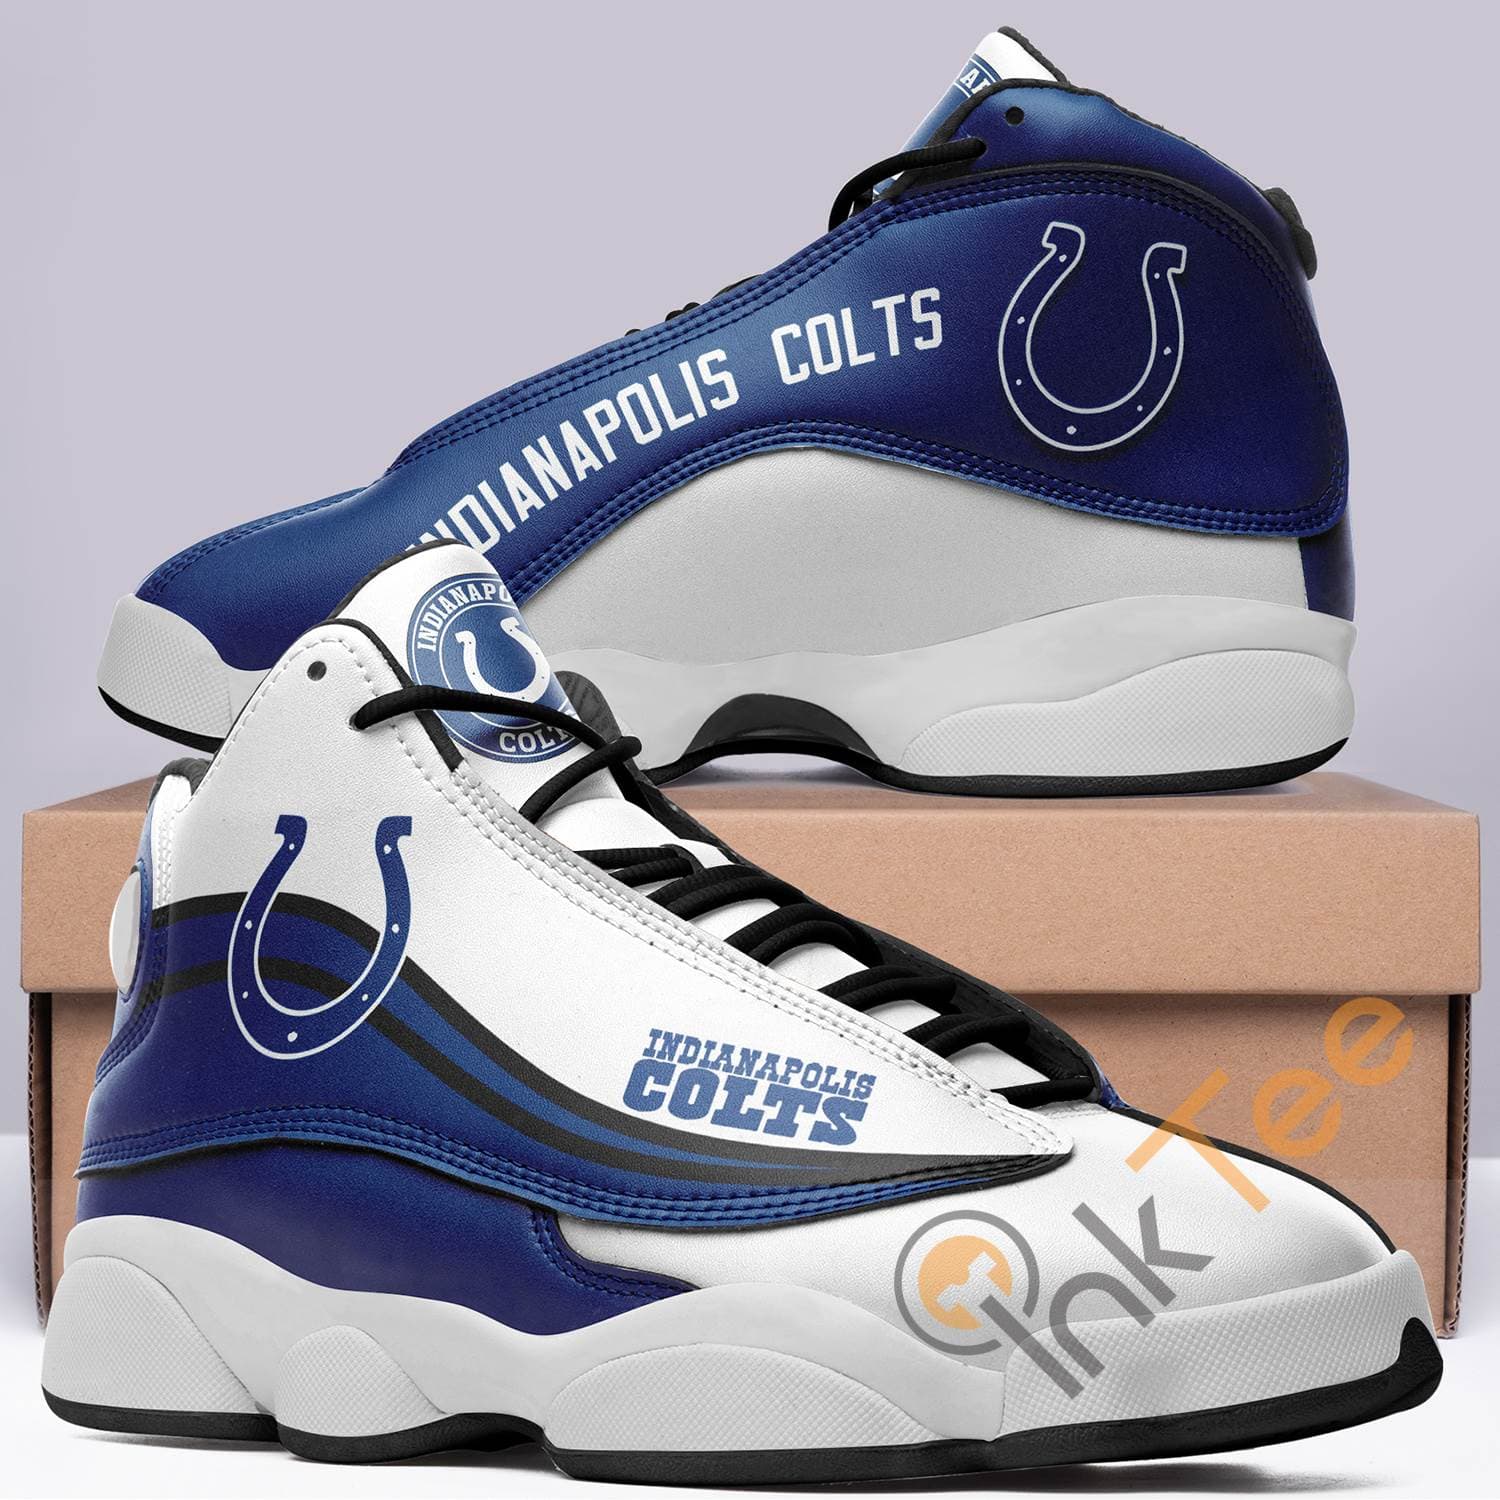 Indianapolis Colts Nfl Team Air Jordan Shoes